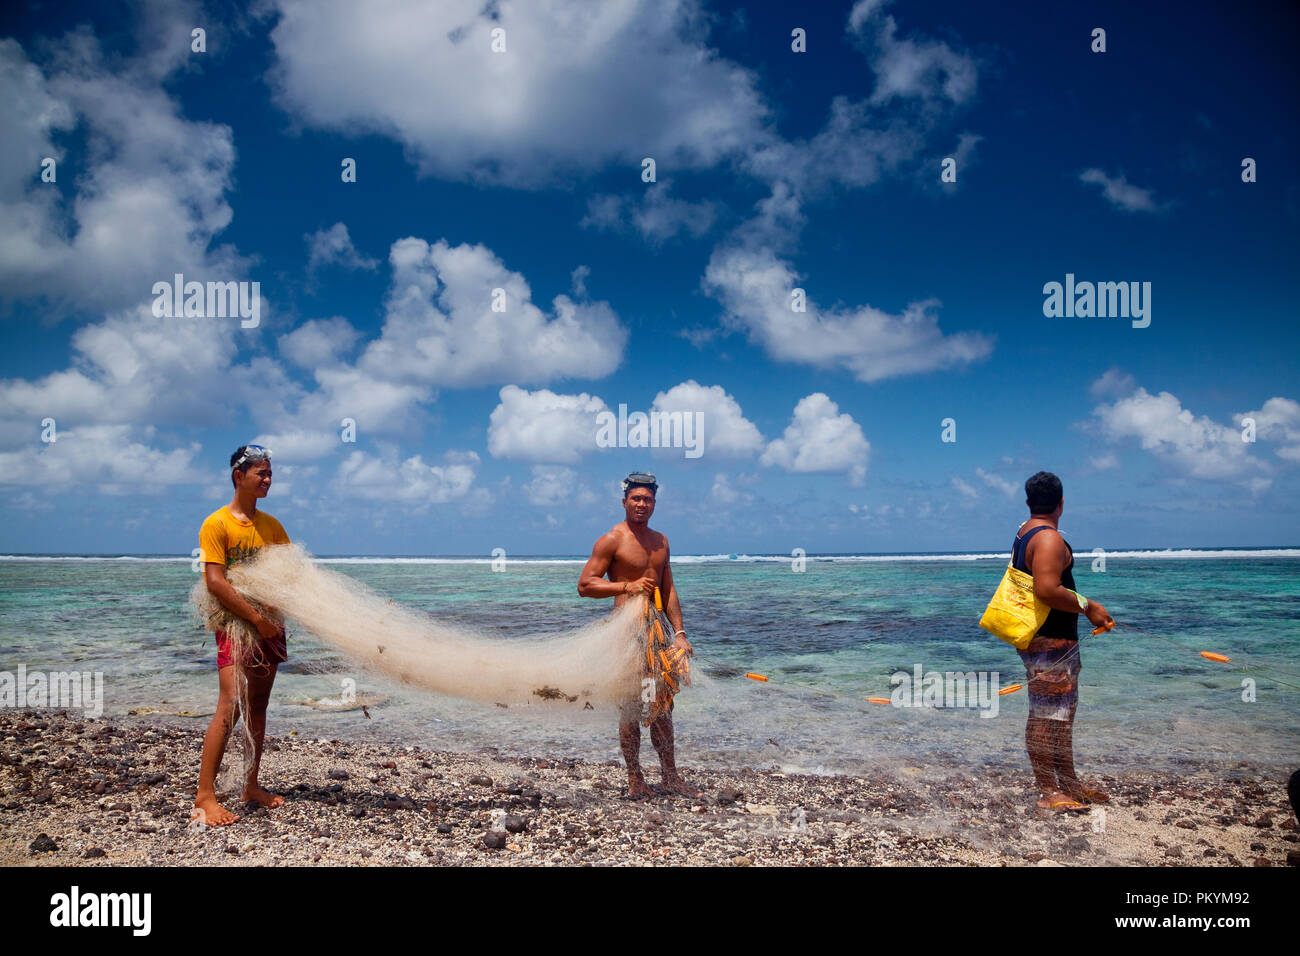 https://c8.alamy.com/comp/PKYM92/locals-prepare-a-fishing-net-to-catch-fish-in-the-lagoon-at-lepa-beach-samoa-PKYM92.jpg